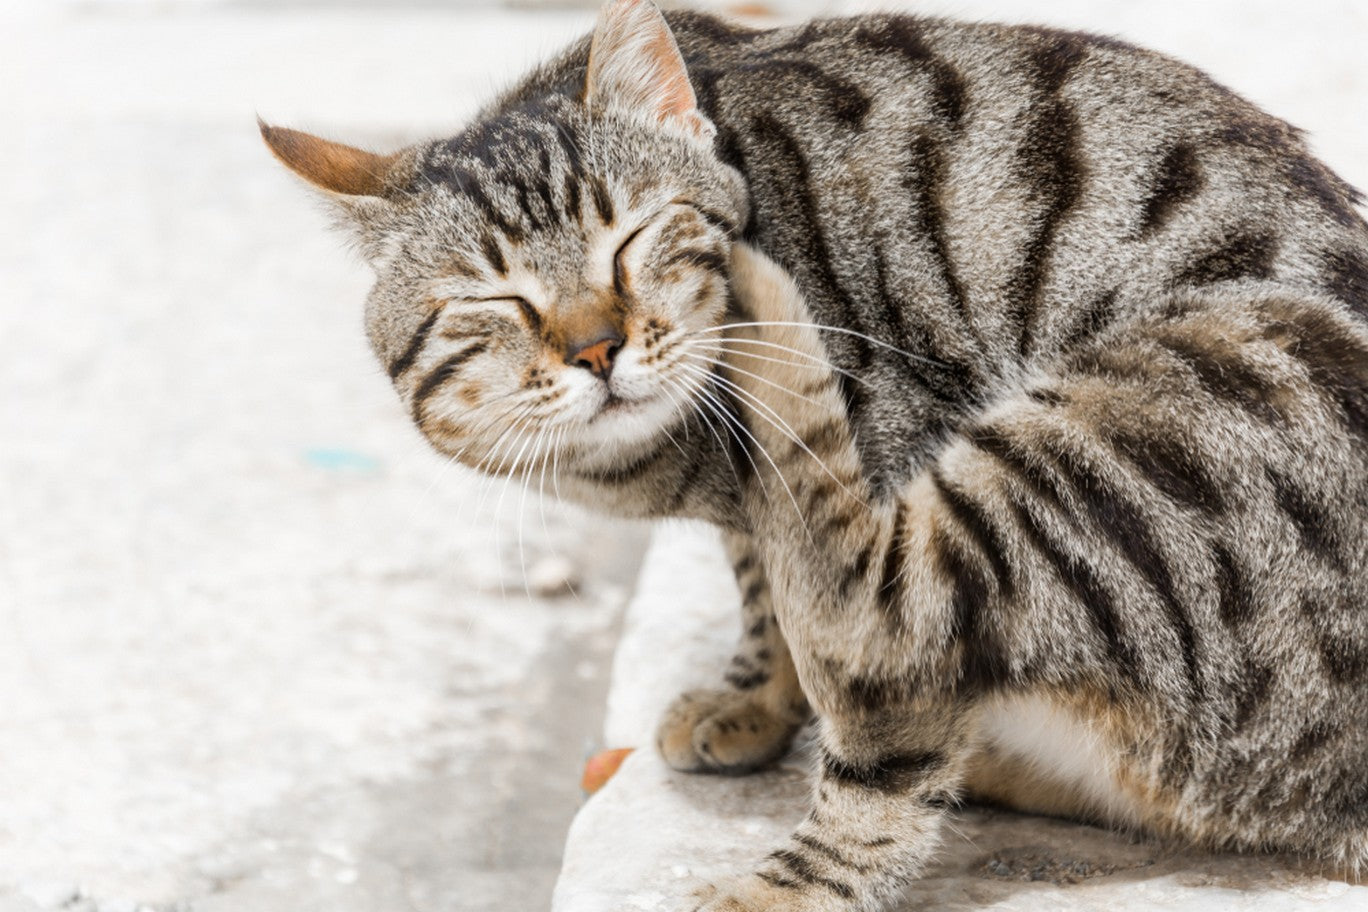 cat flea bites on humans treatment